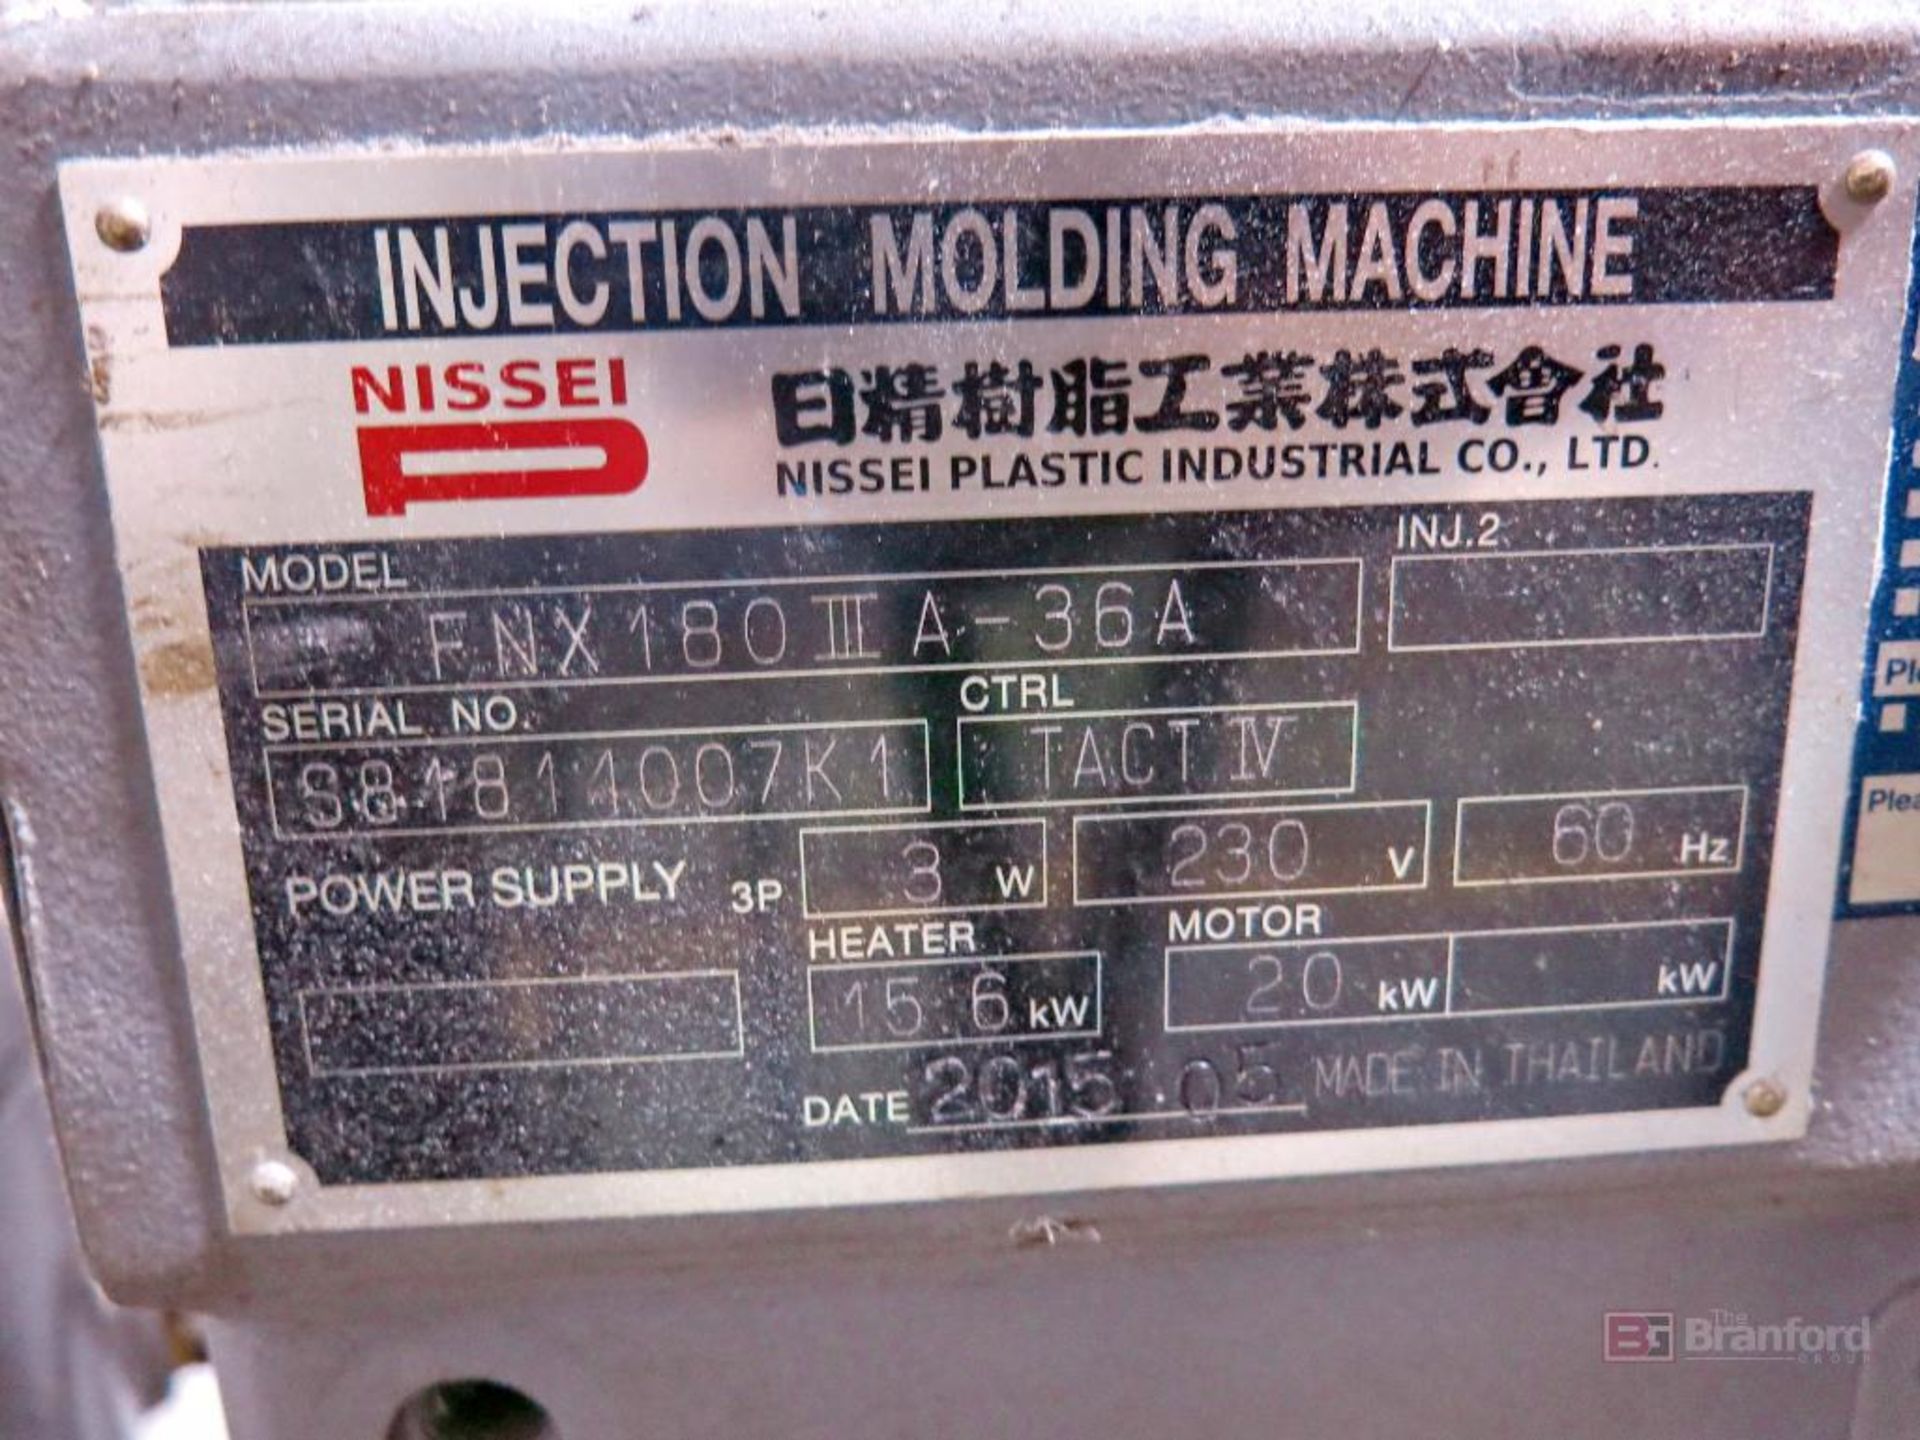 Nissei Model FNX180III A-36A 180-Ton x 9.6-Oz Shot Hybrid Injection Molding Machine - Image 9 of 10